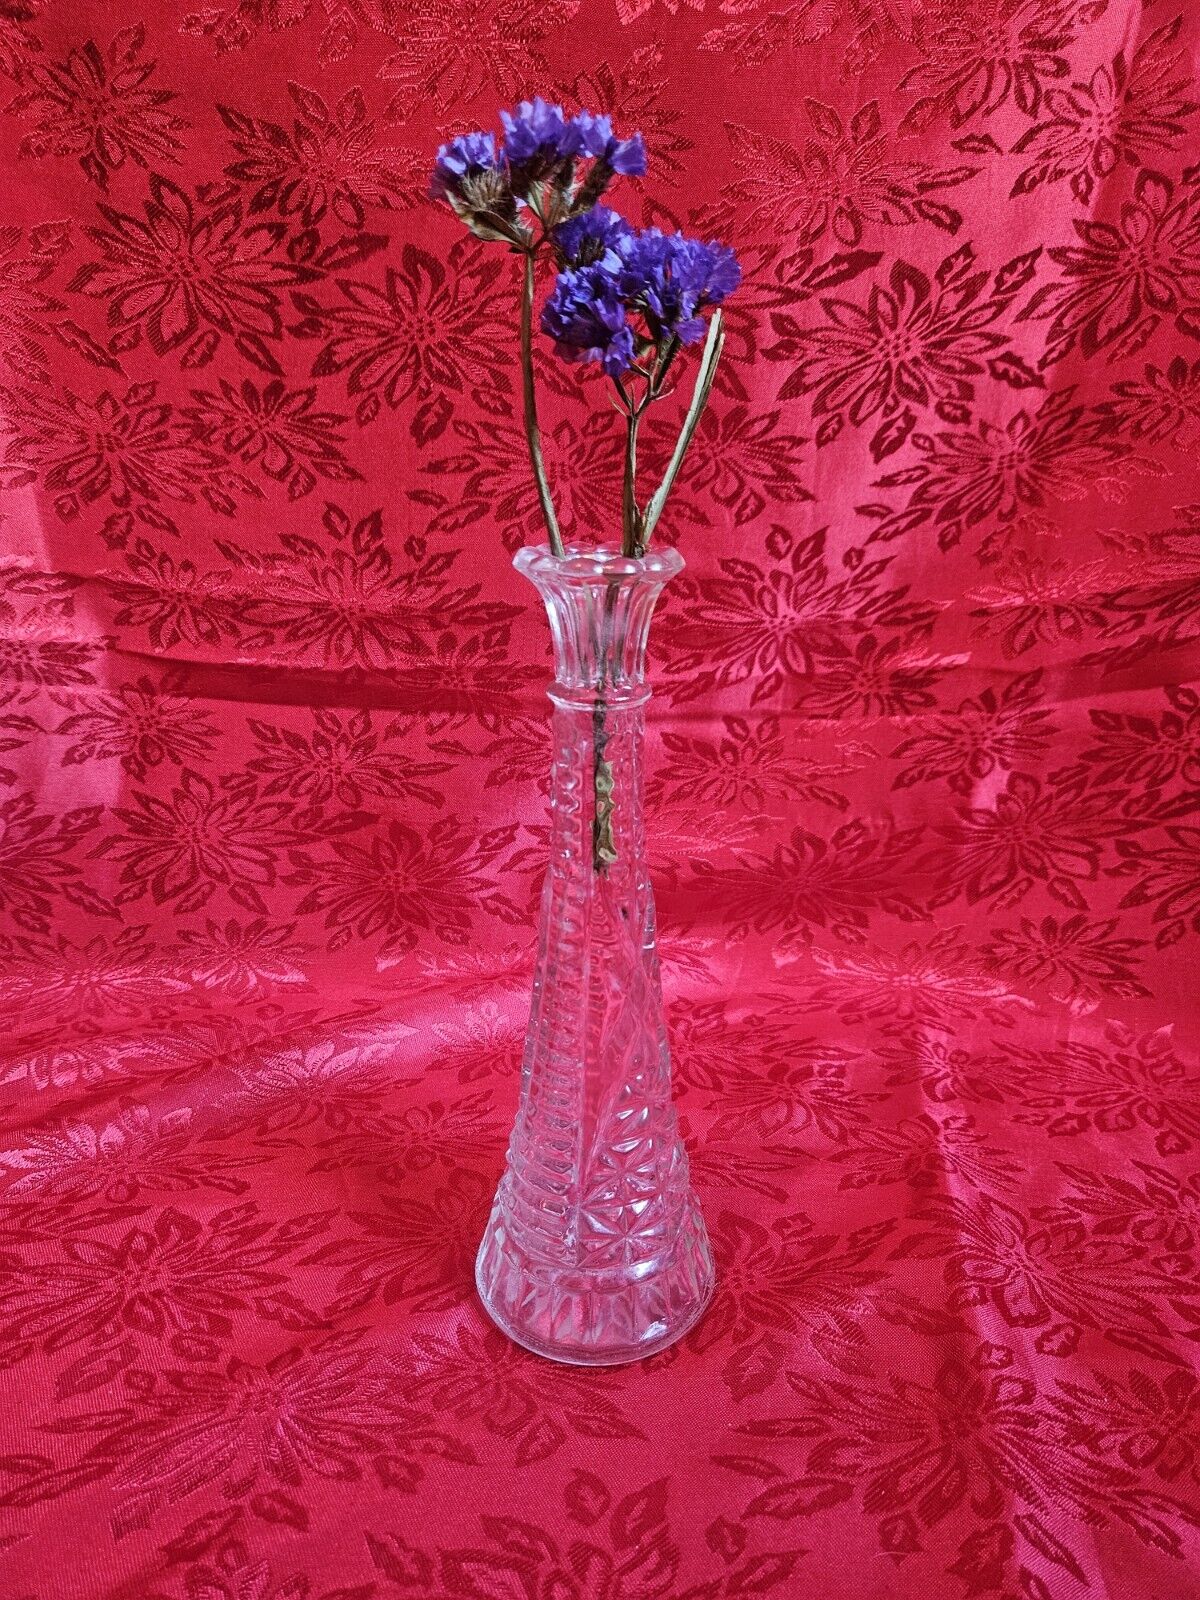 Anchor Hocking Stars And Bars Crystal Vase Vintage